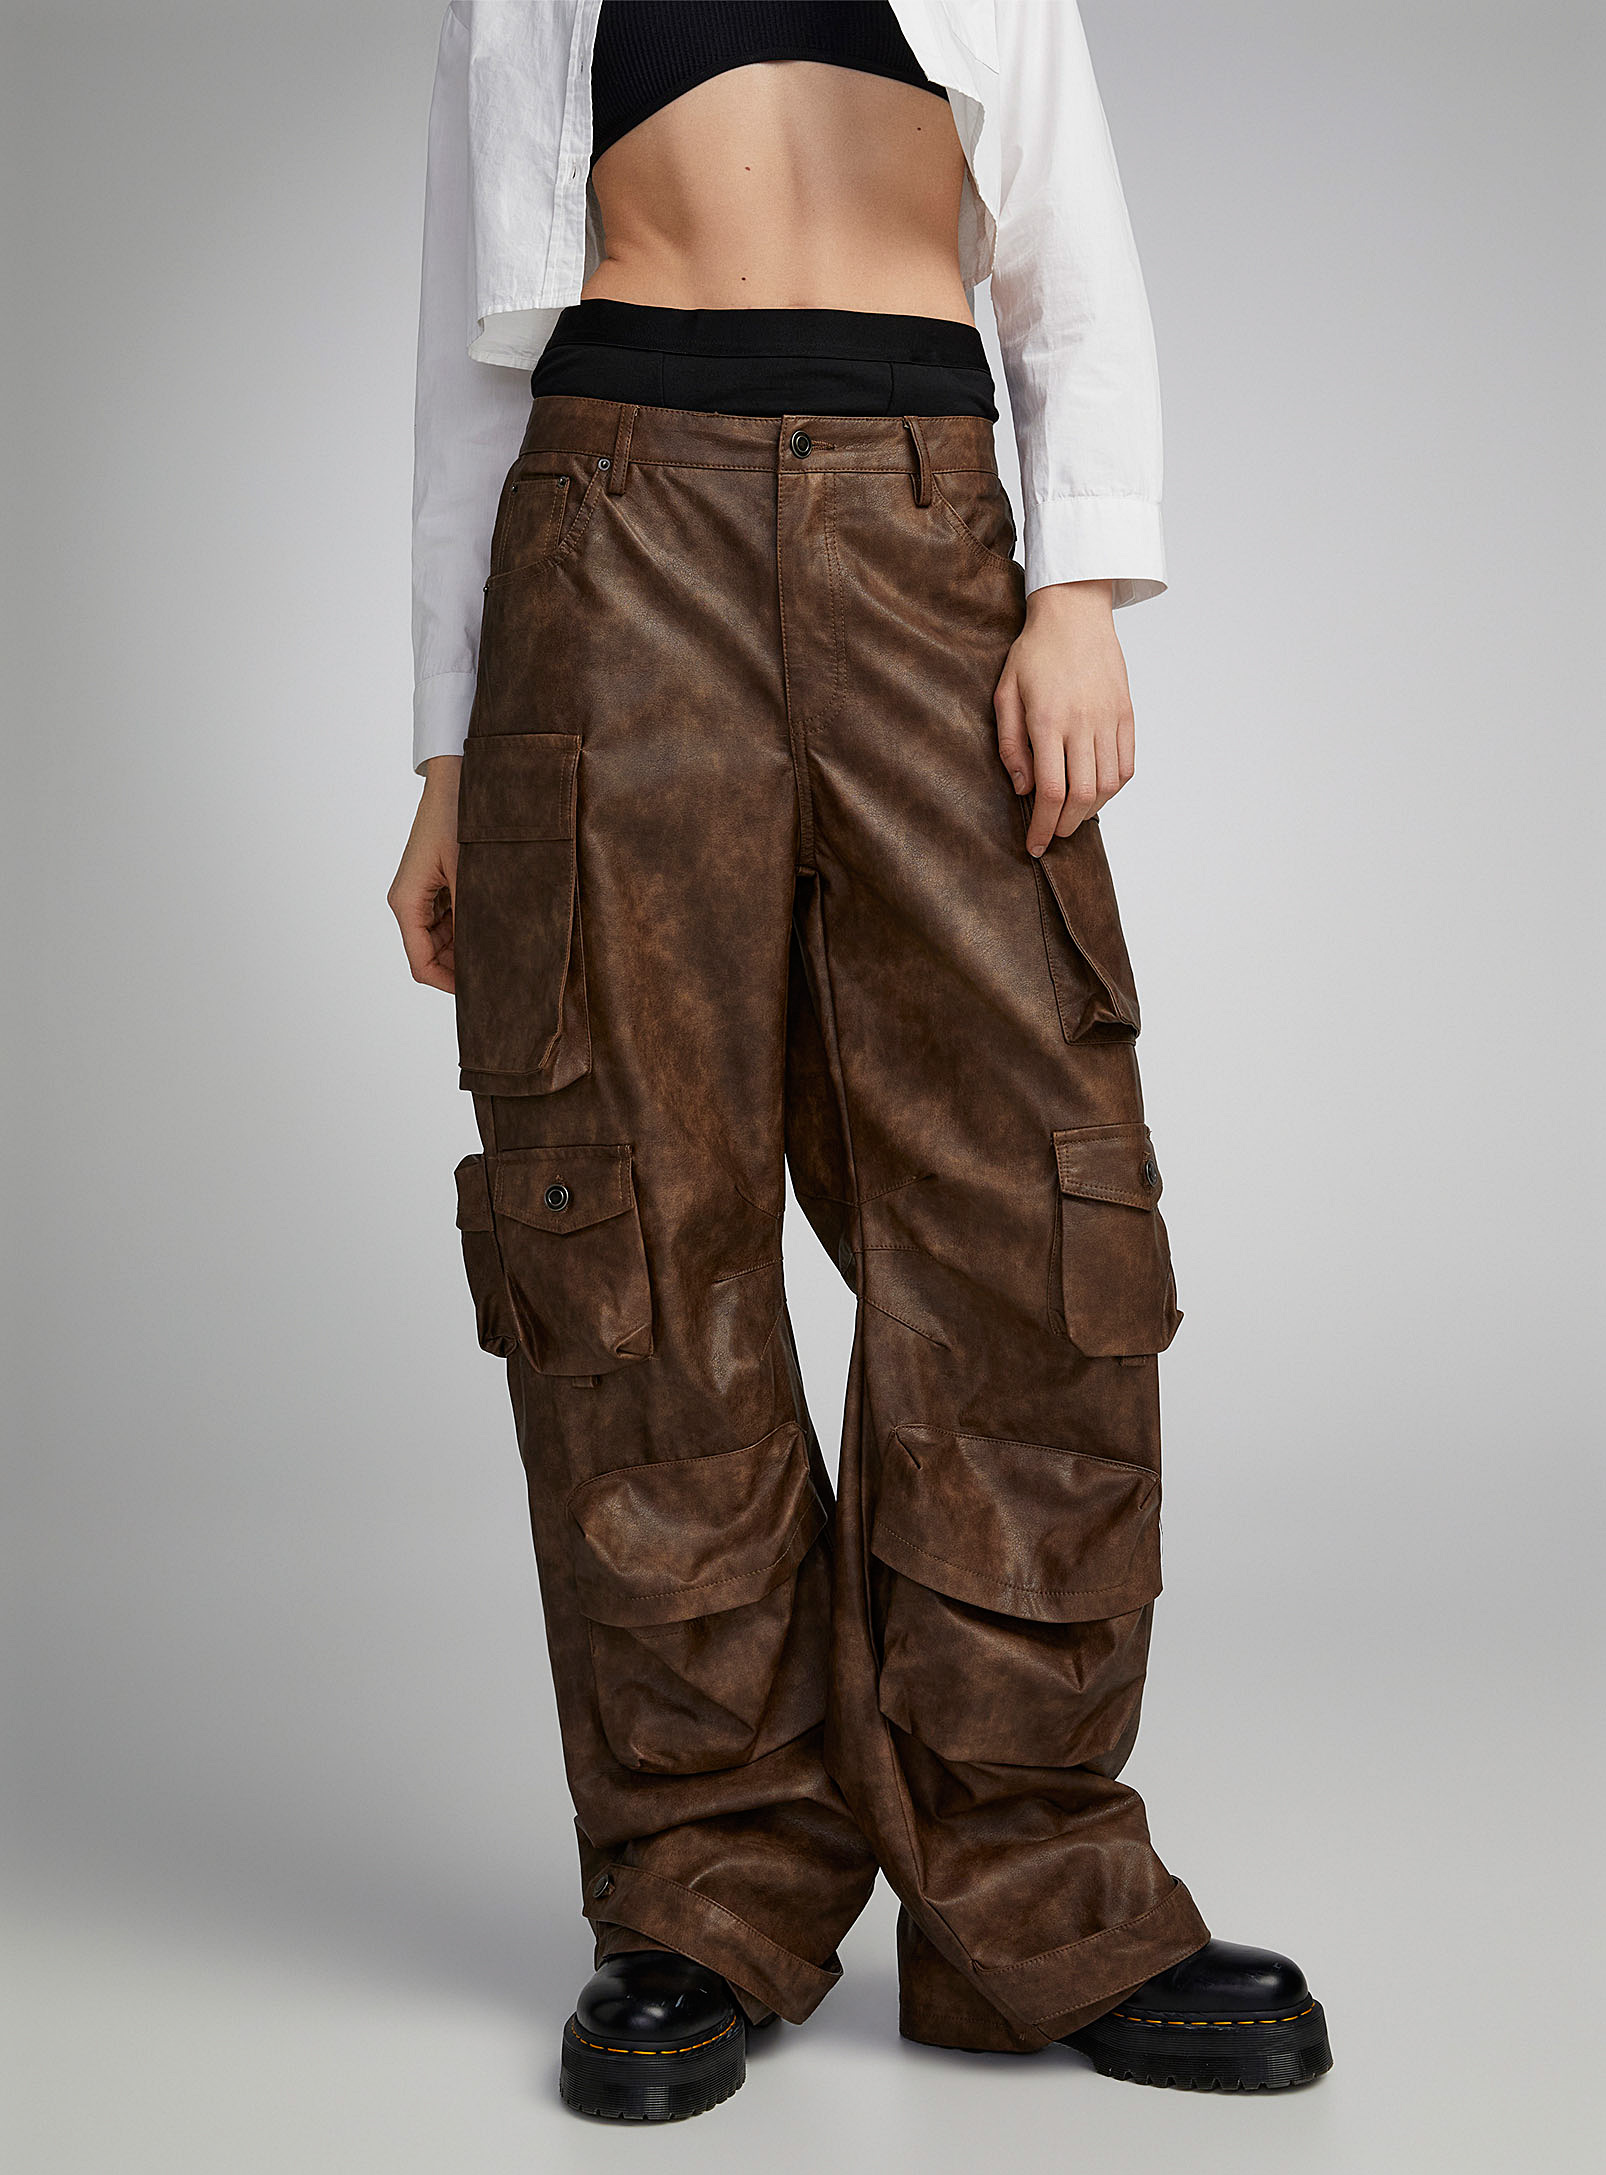 Rehab - Le pantalon cargo faux cuir brun